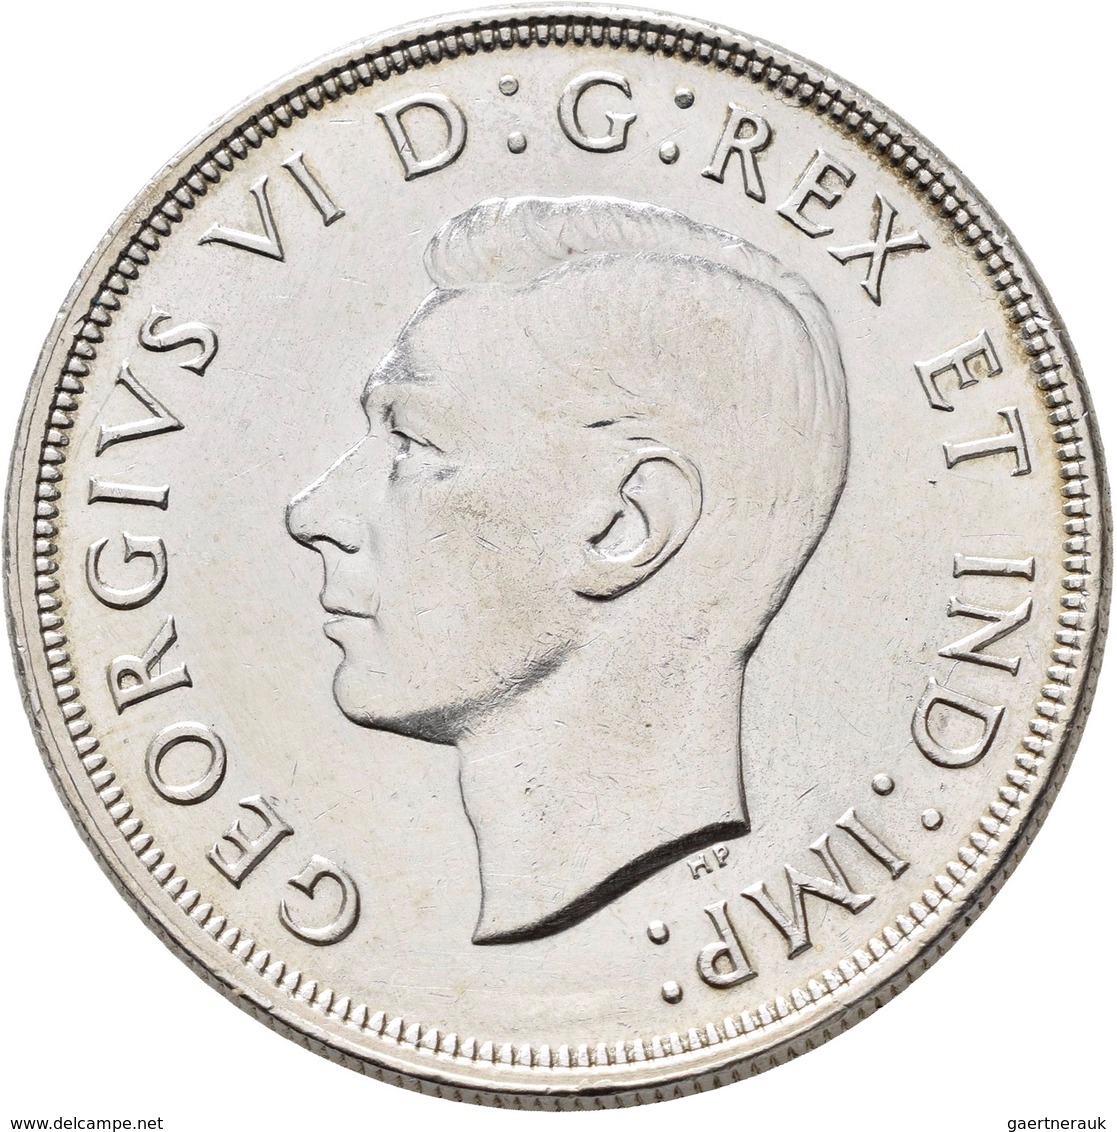 Kanada: George VI. 1936-1953: 1 Dollar 1947, Kanu / Voyager, KM# 37, Variante Blunt 7 / Stumpfe 7. 2 - Canada